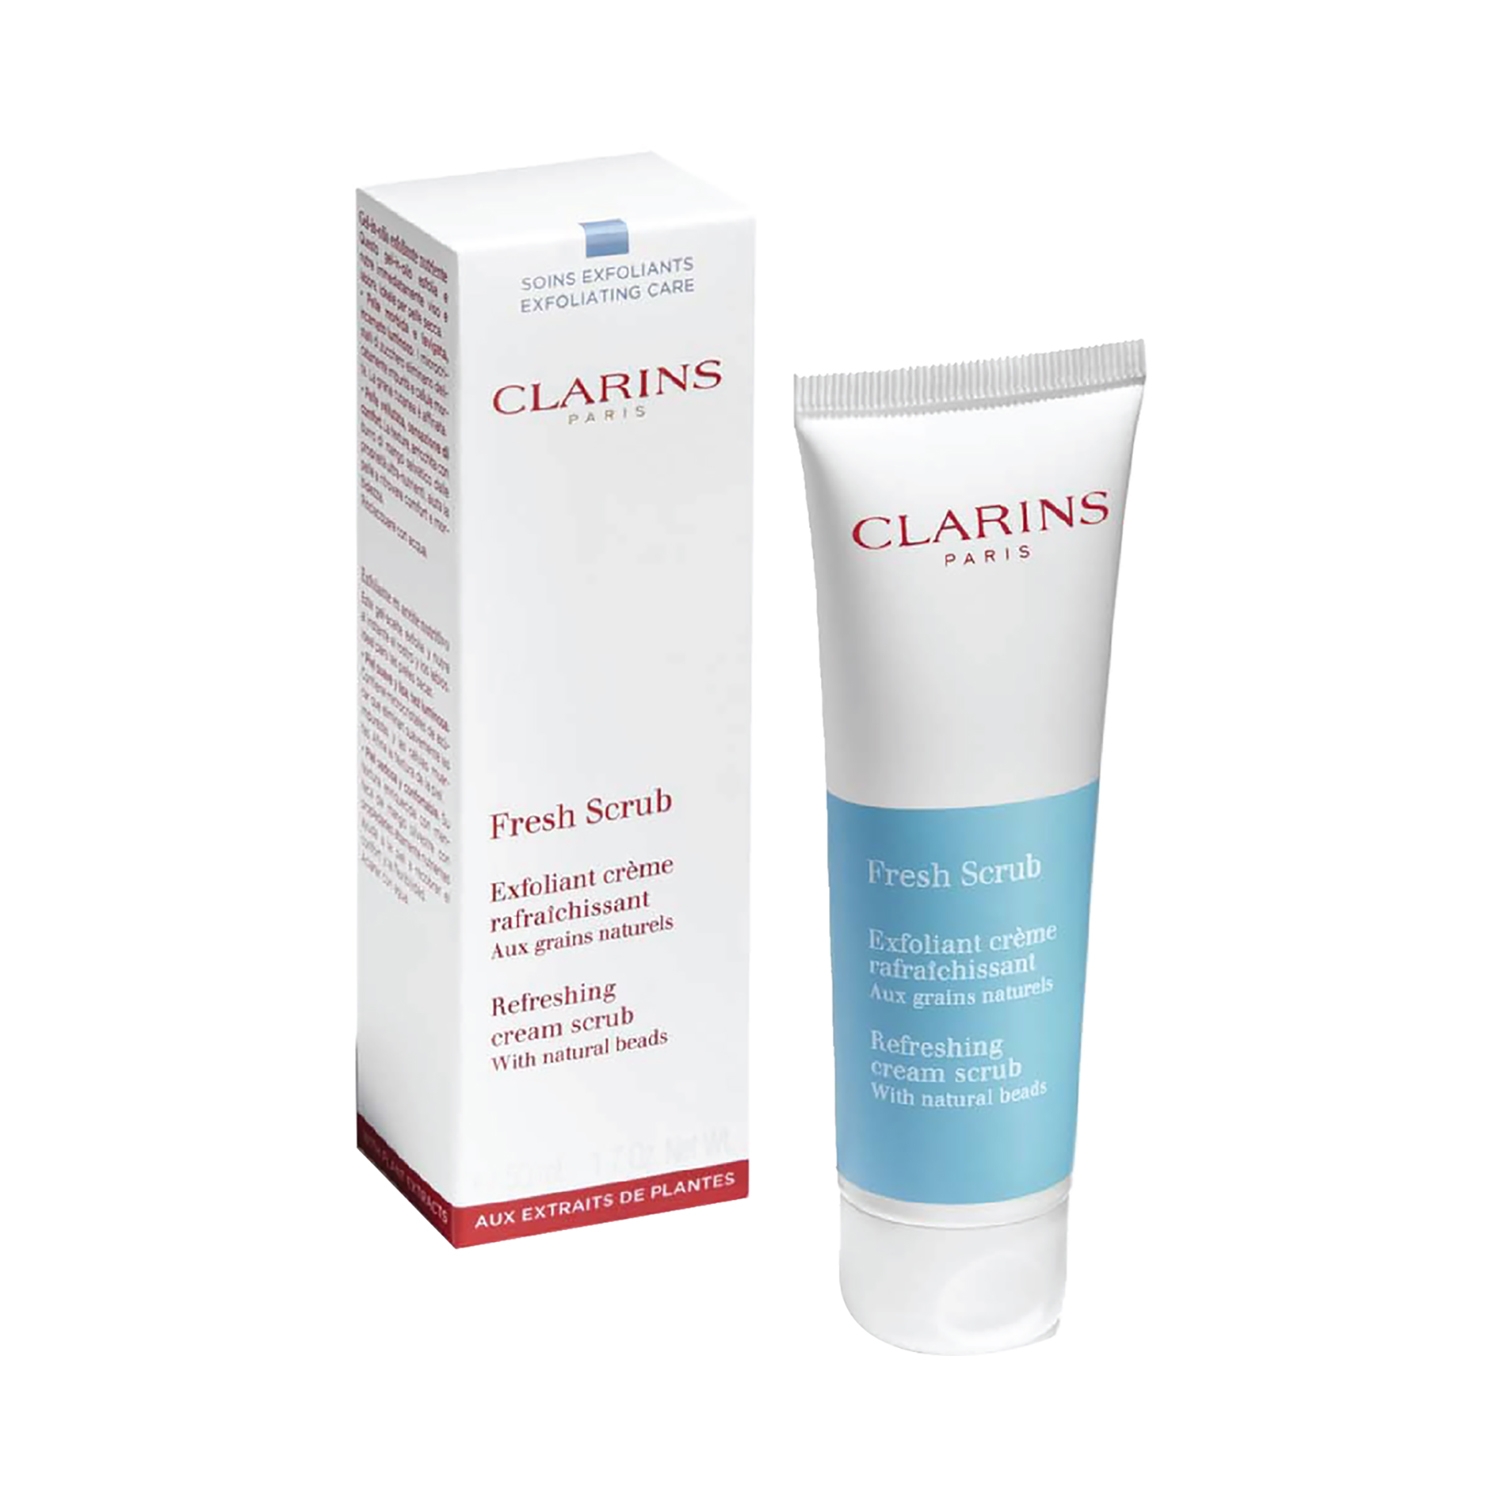 Clarins | Clarins Refreshing Cream Scrub (50ml)